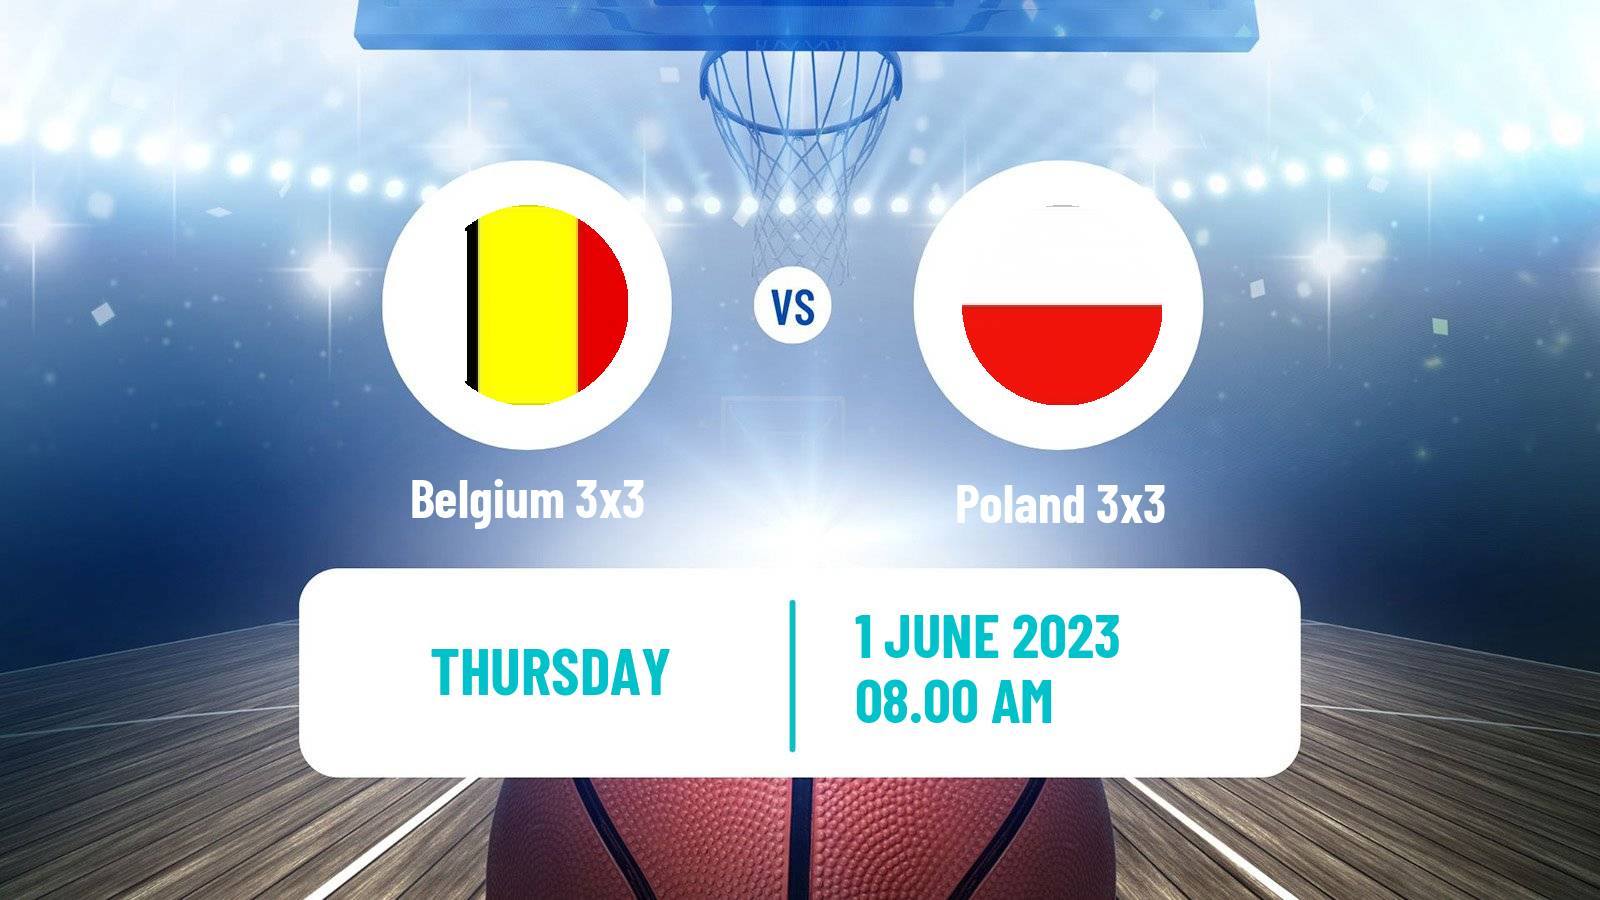 Basketball World Cup Basketball 3x3 Belgium 3x3 - Poland 3x3